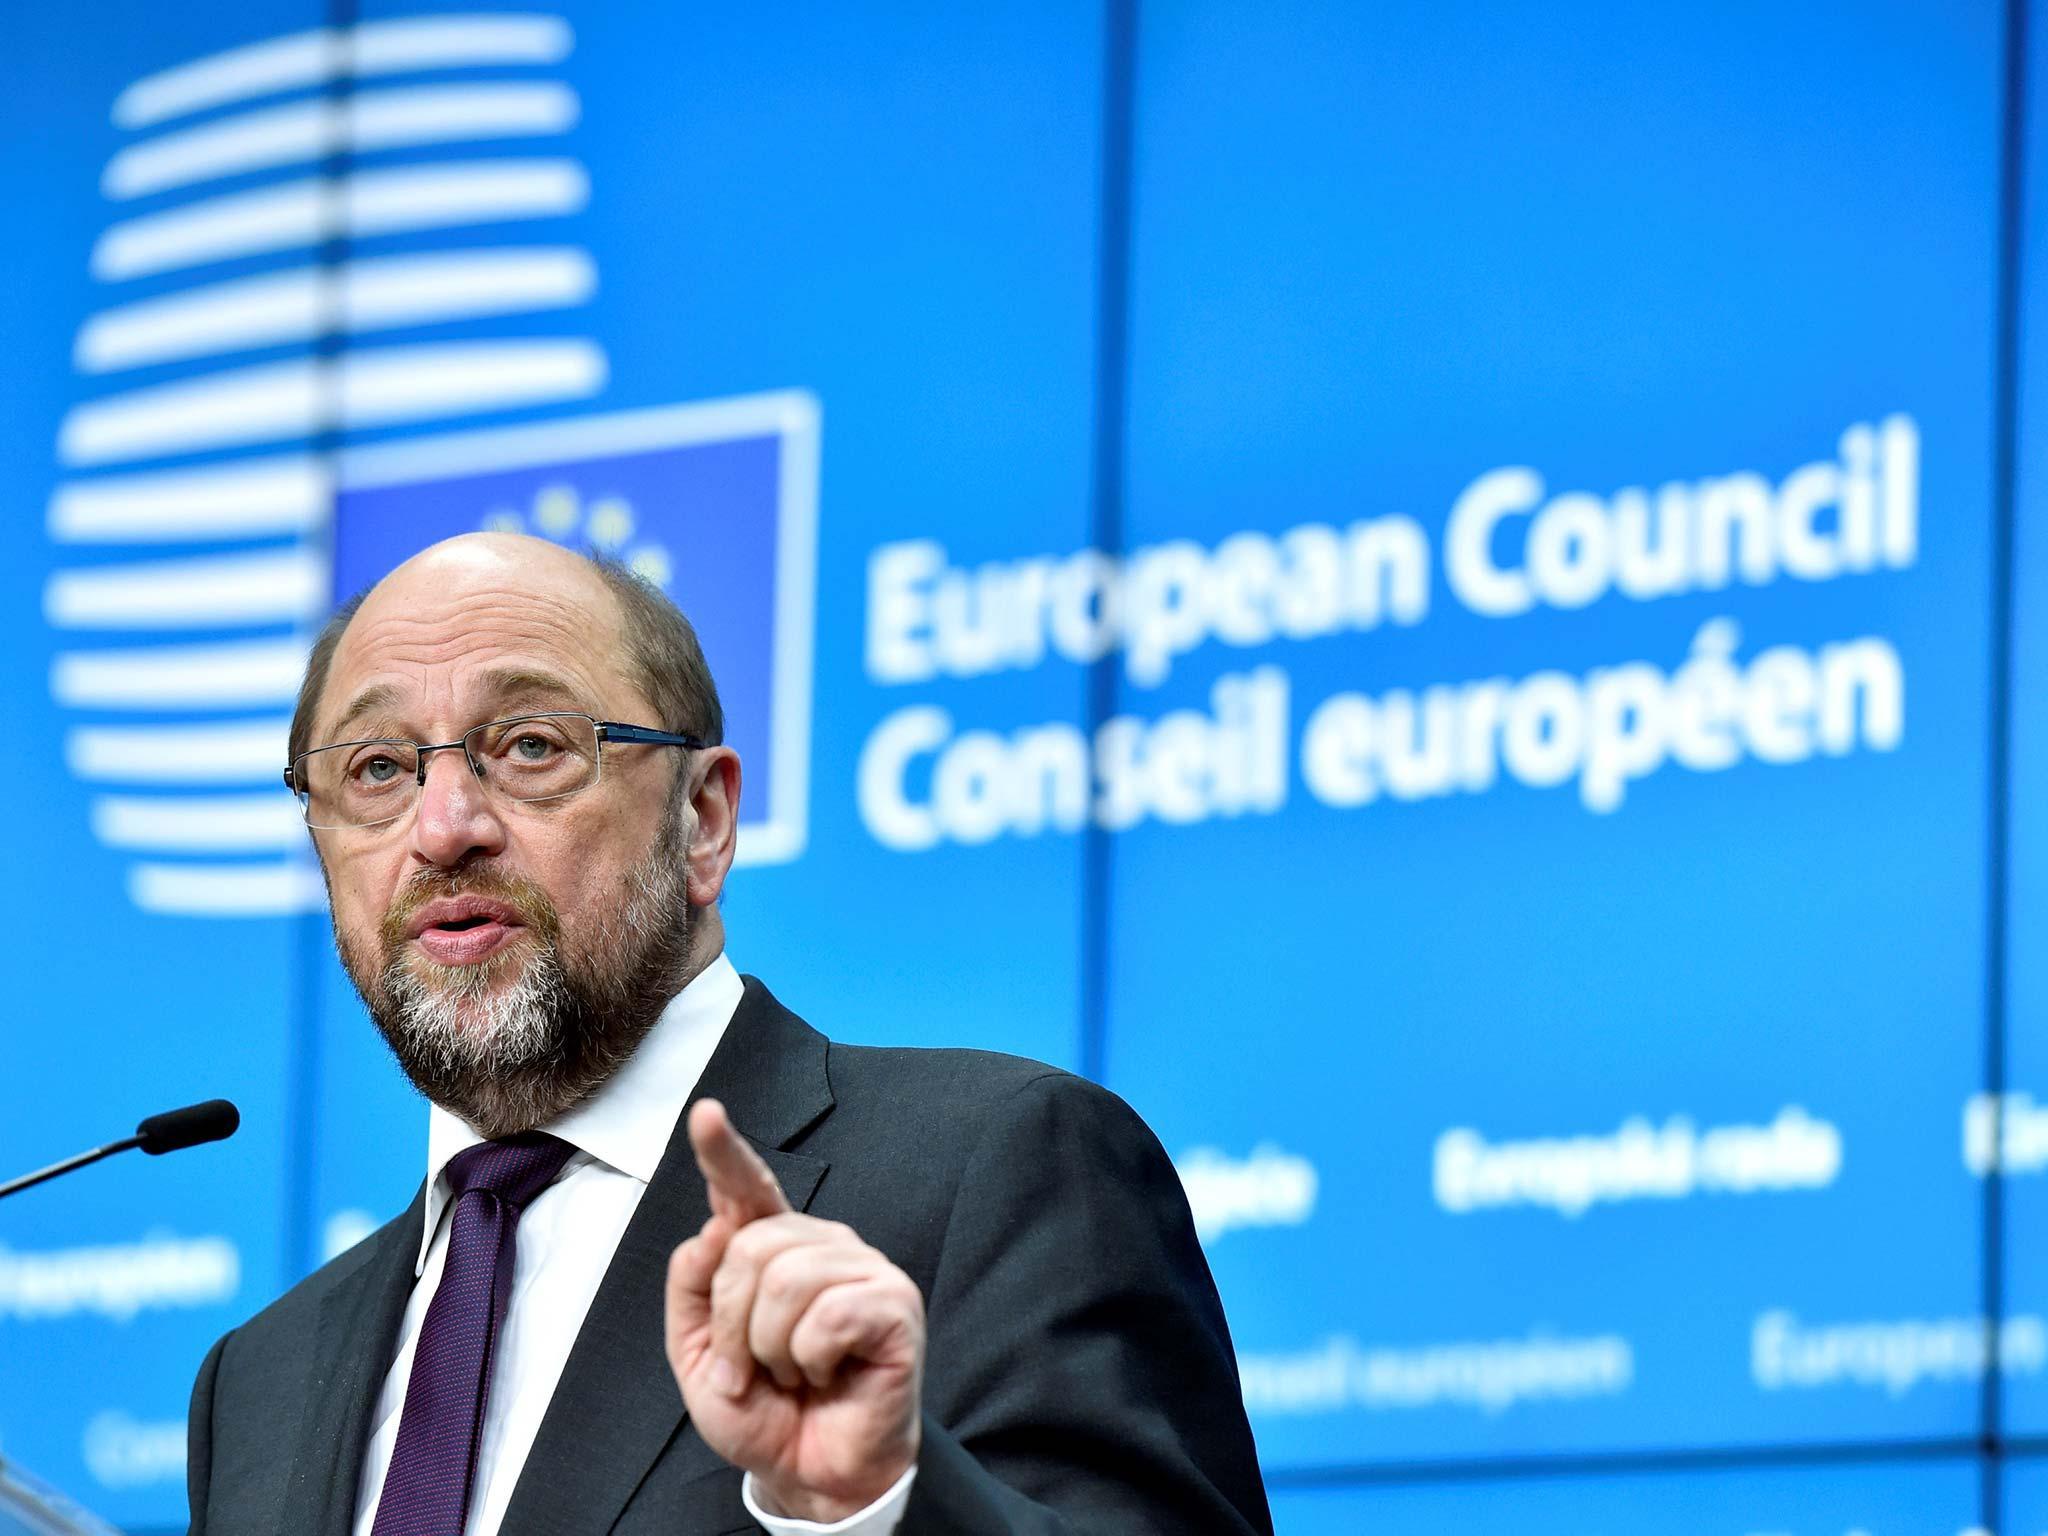 Martin Schulz speaking to reporters in the Belgian capital today